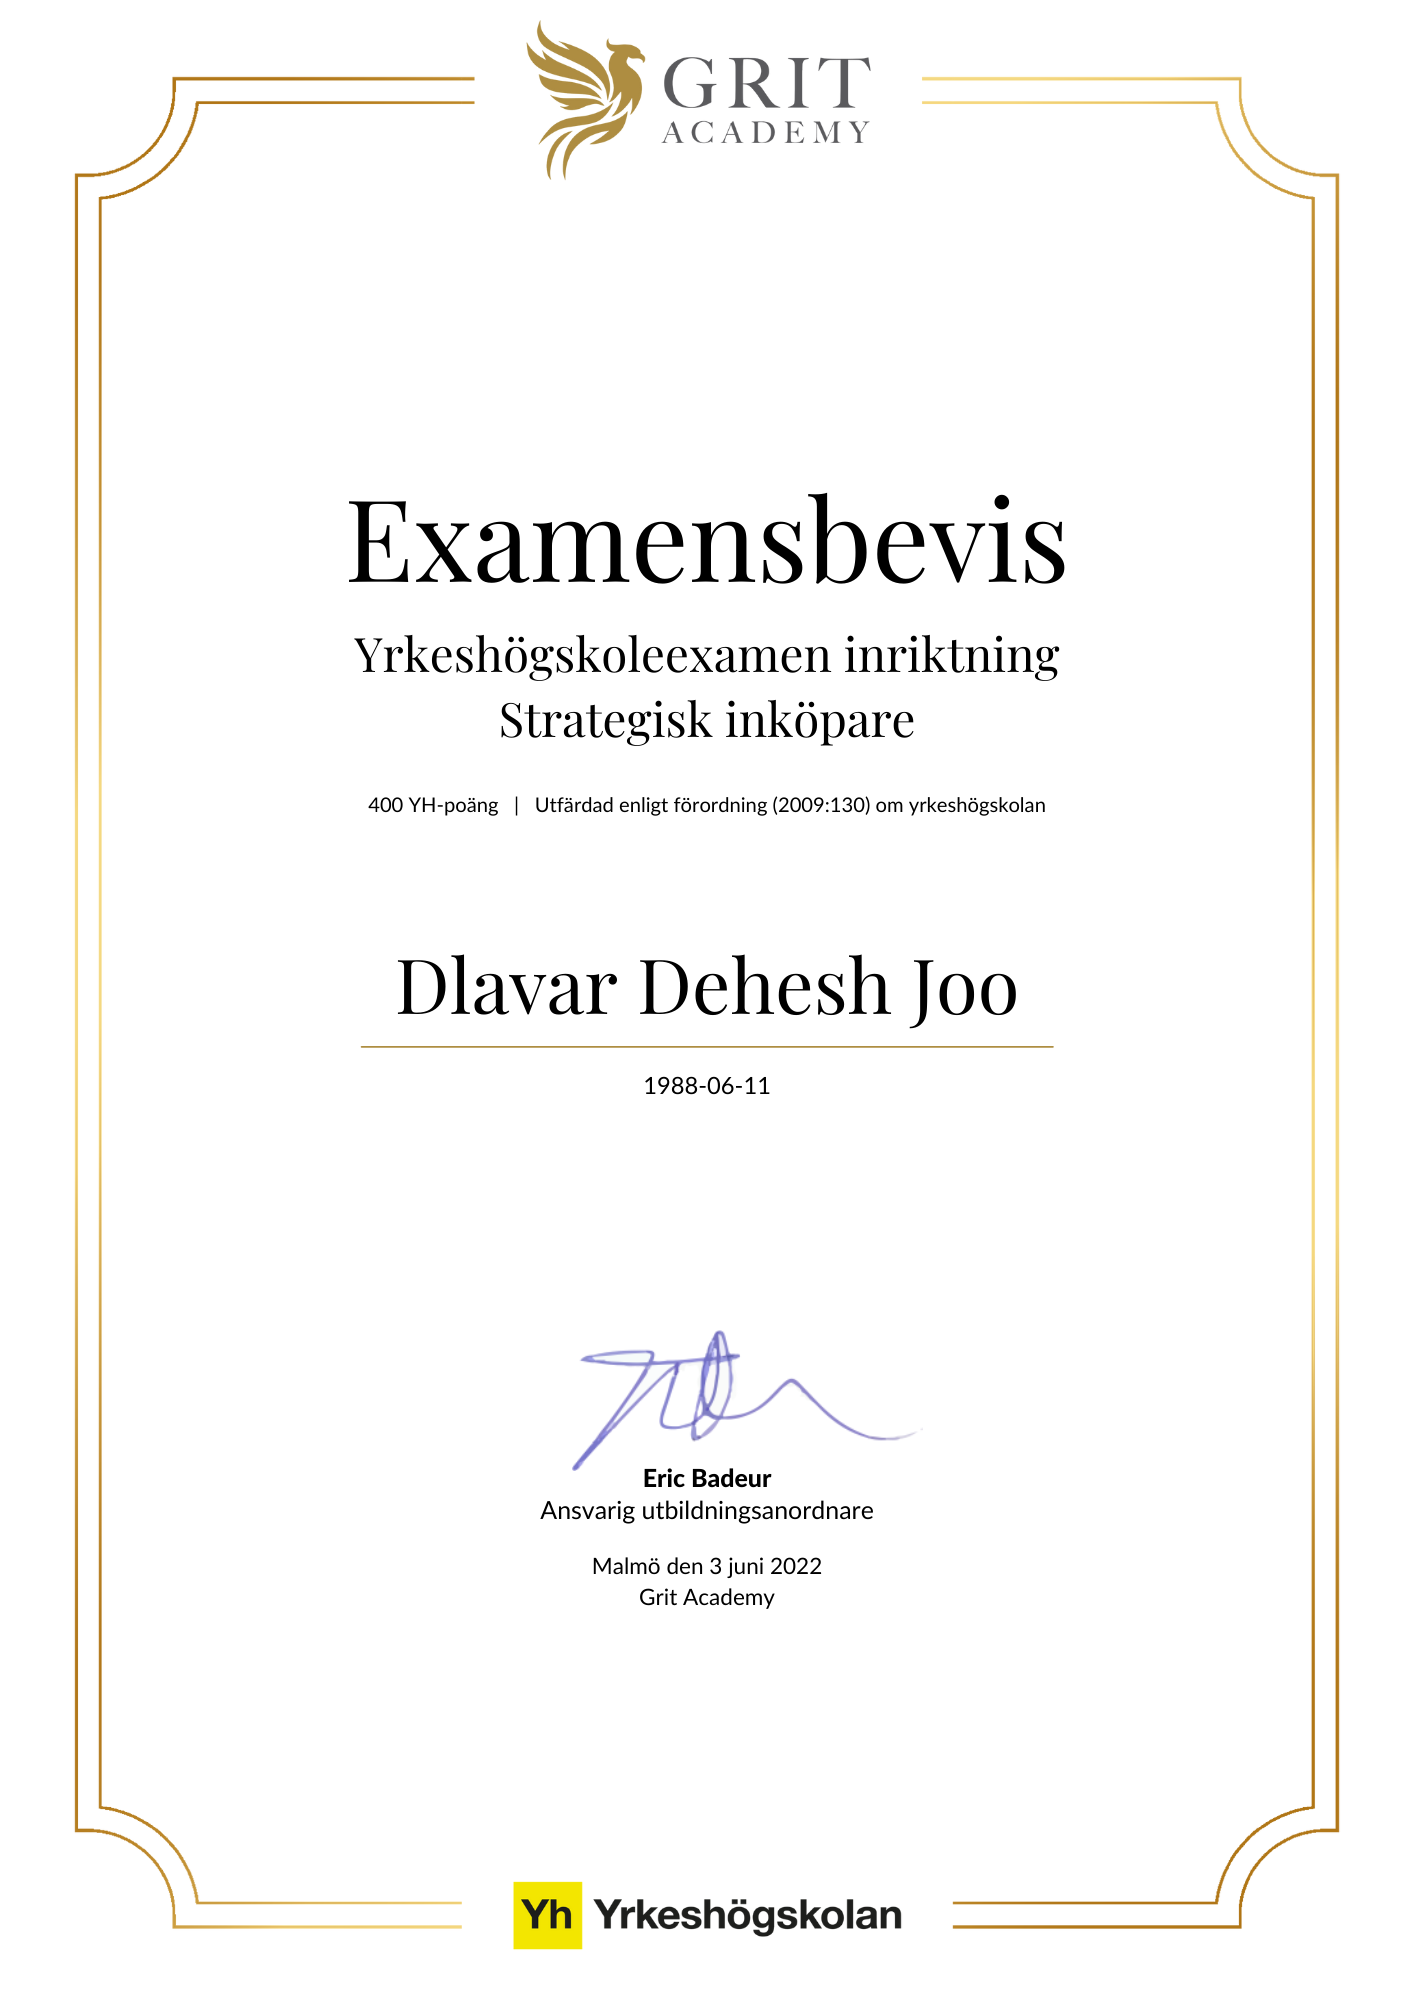 Examensbevis Dlavar Dehesh Joo - 1